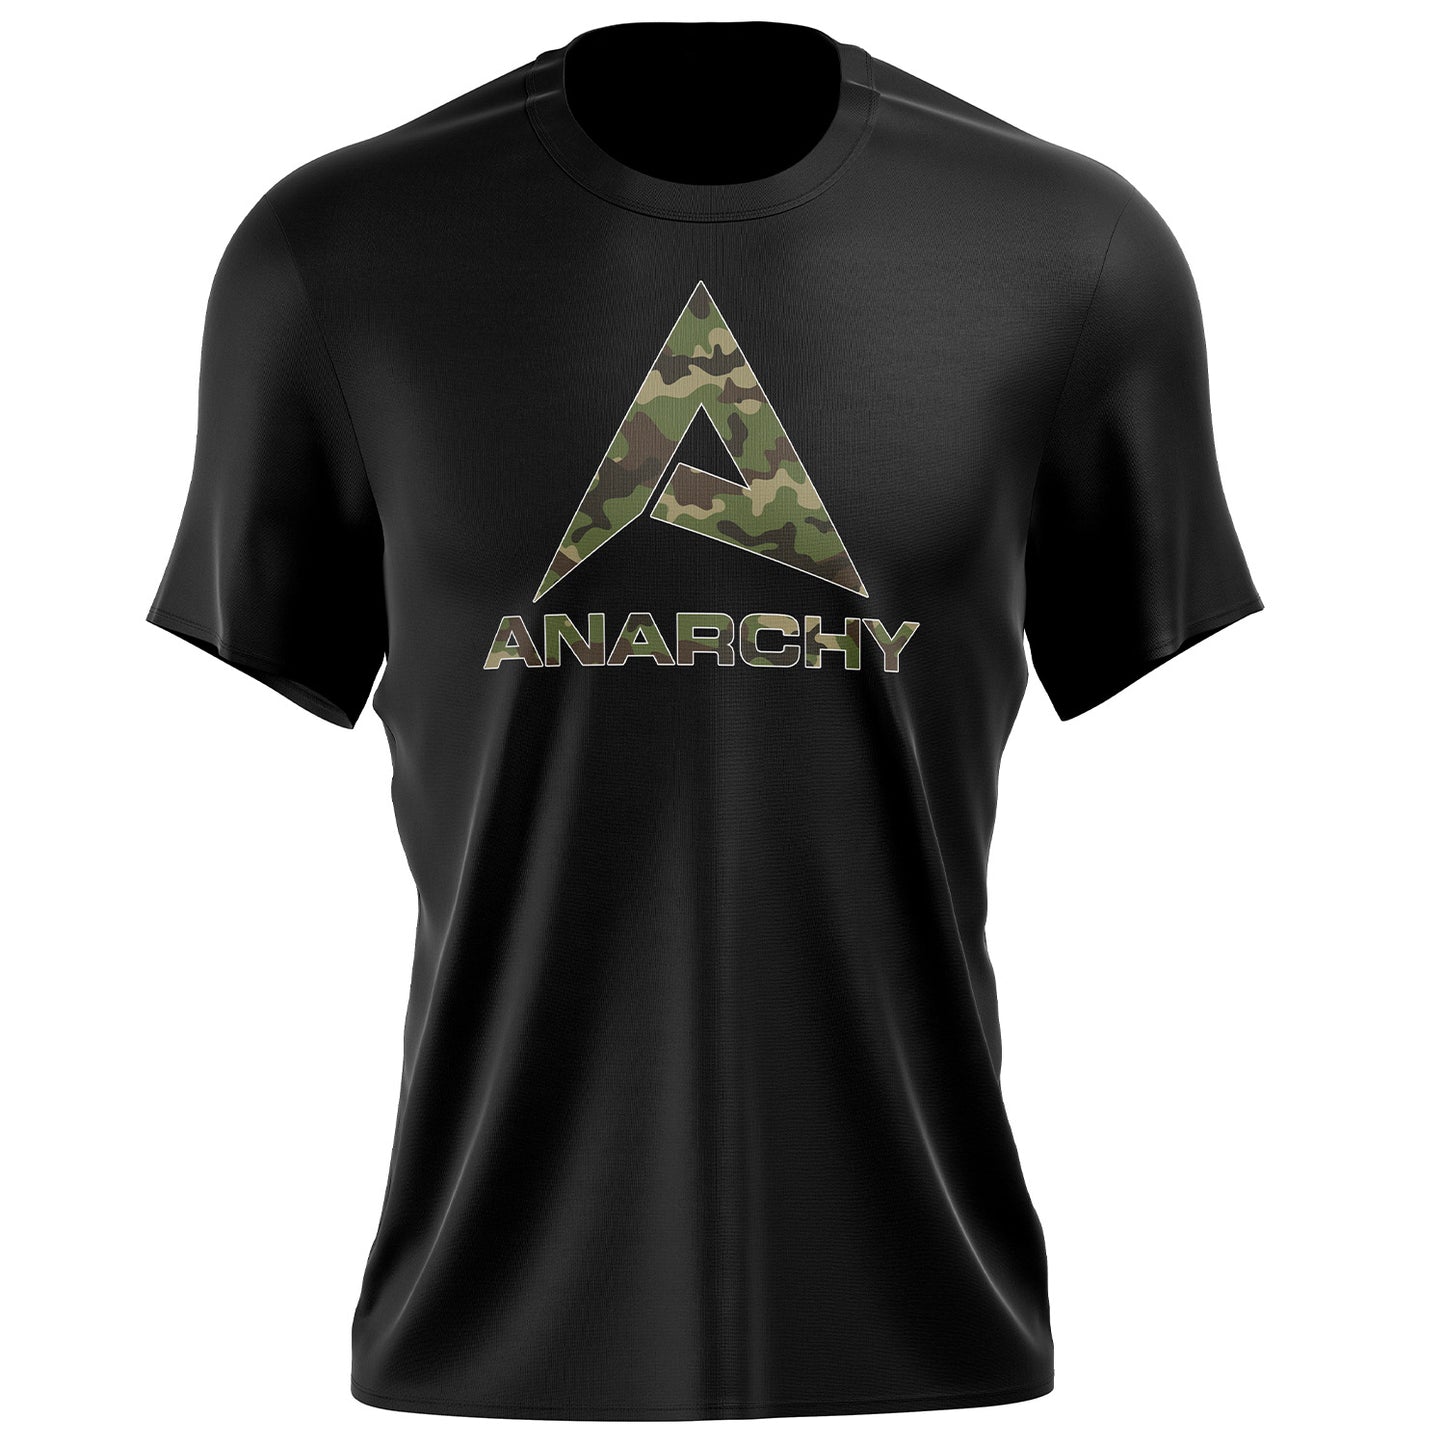 Anarchy - Poly-Cotton Short Sleeve Shirt - Black/Camo